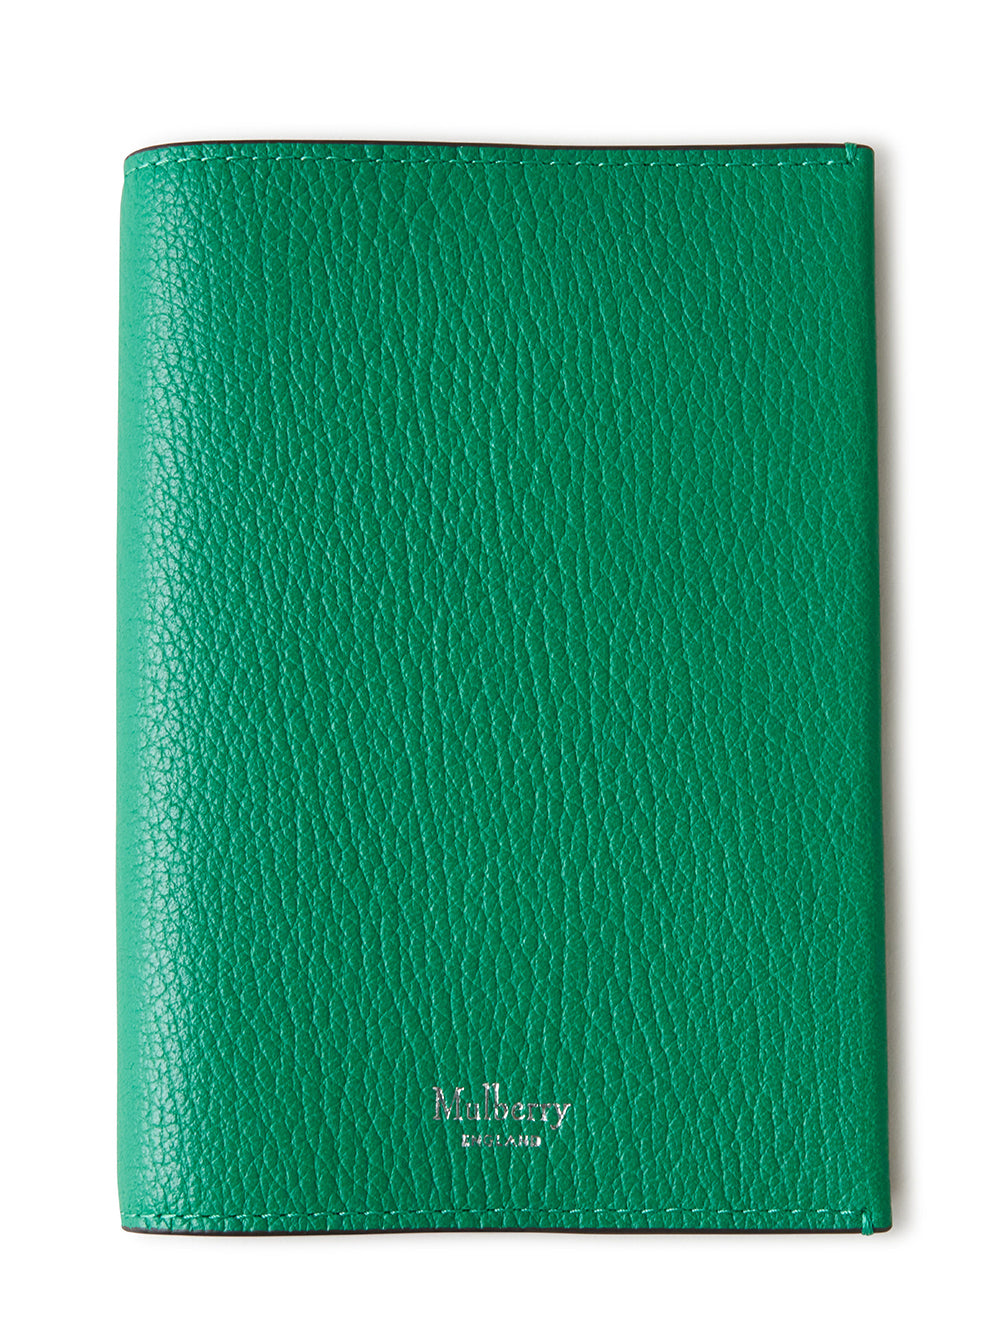 Passport Slip (Lawn Green)